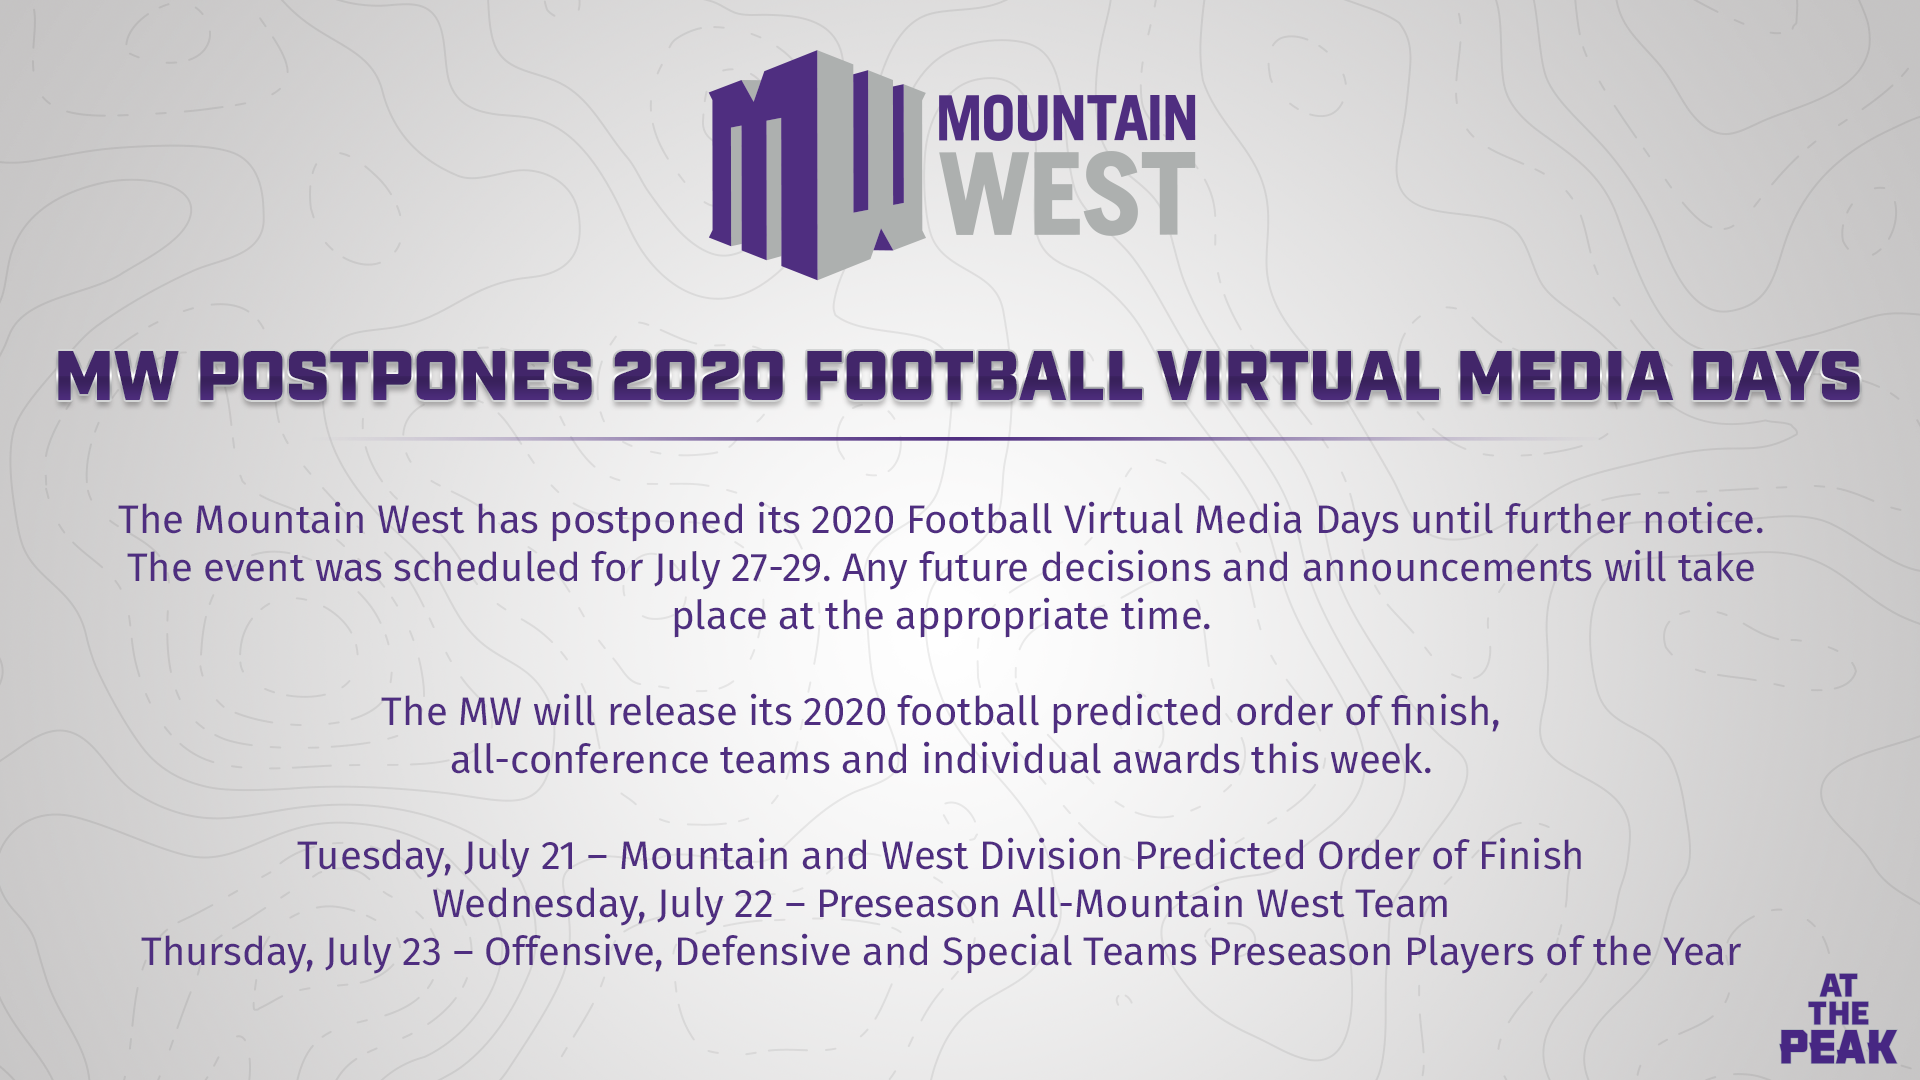 Mountain West Postpones 2020 Football Virtual Media Days